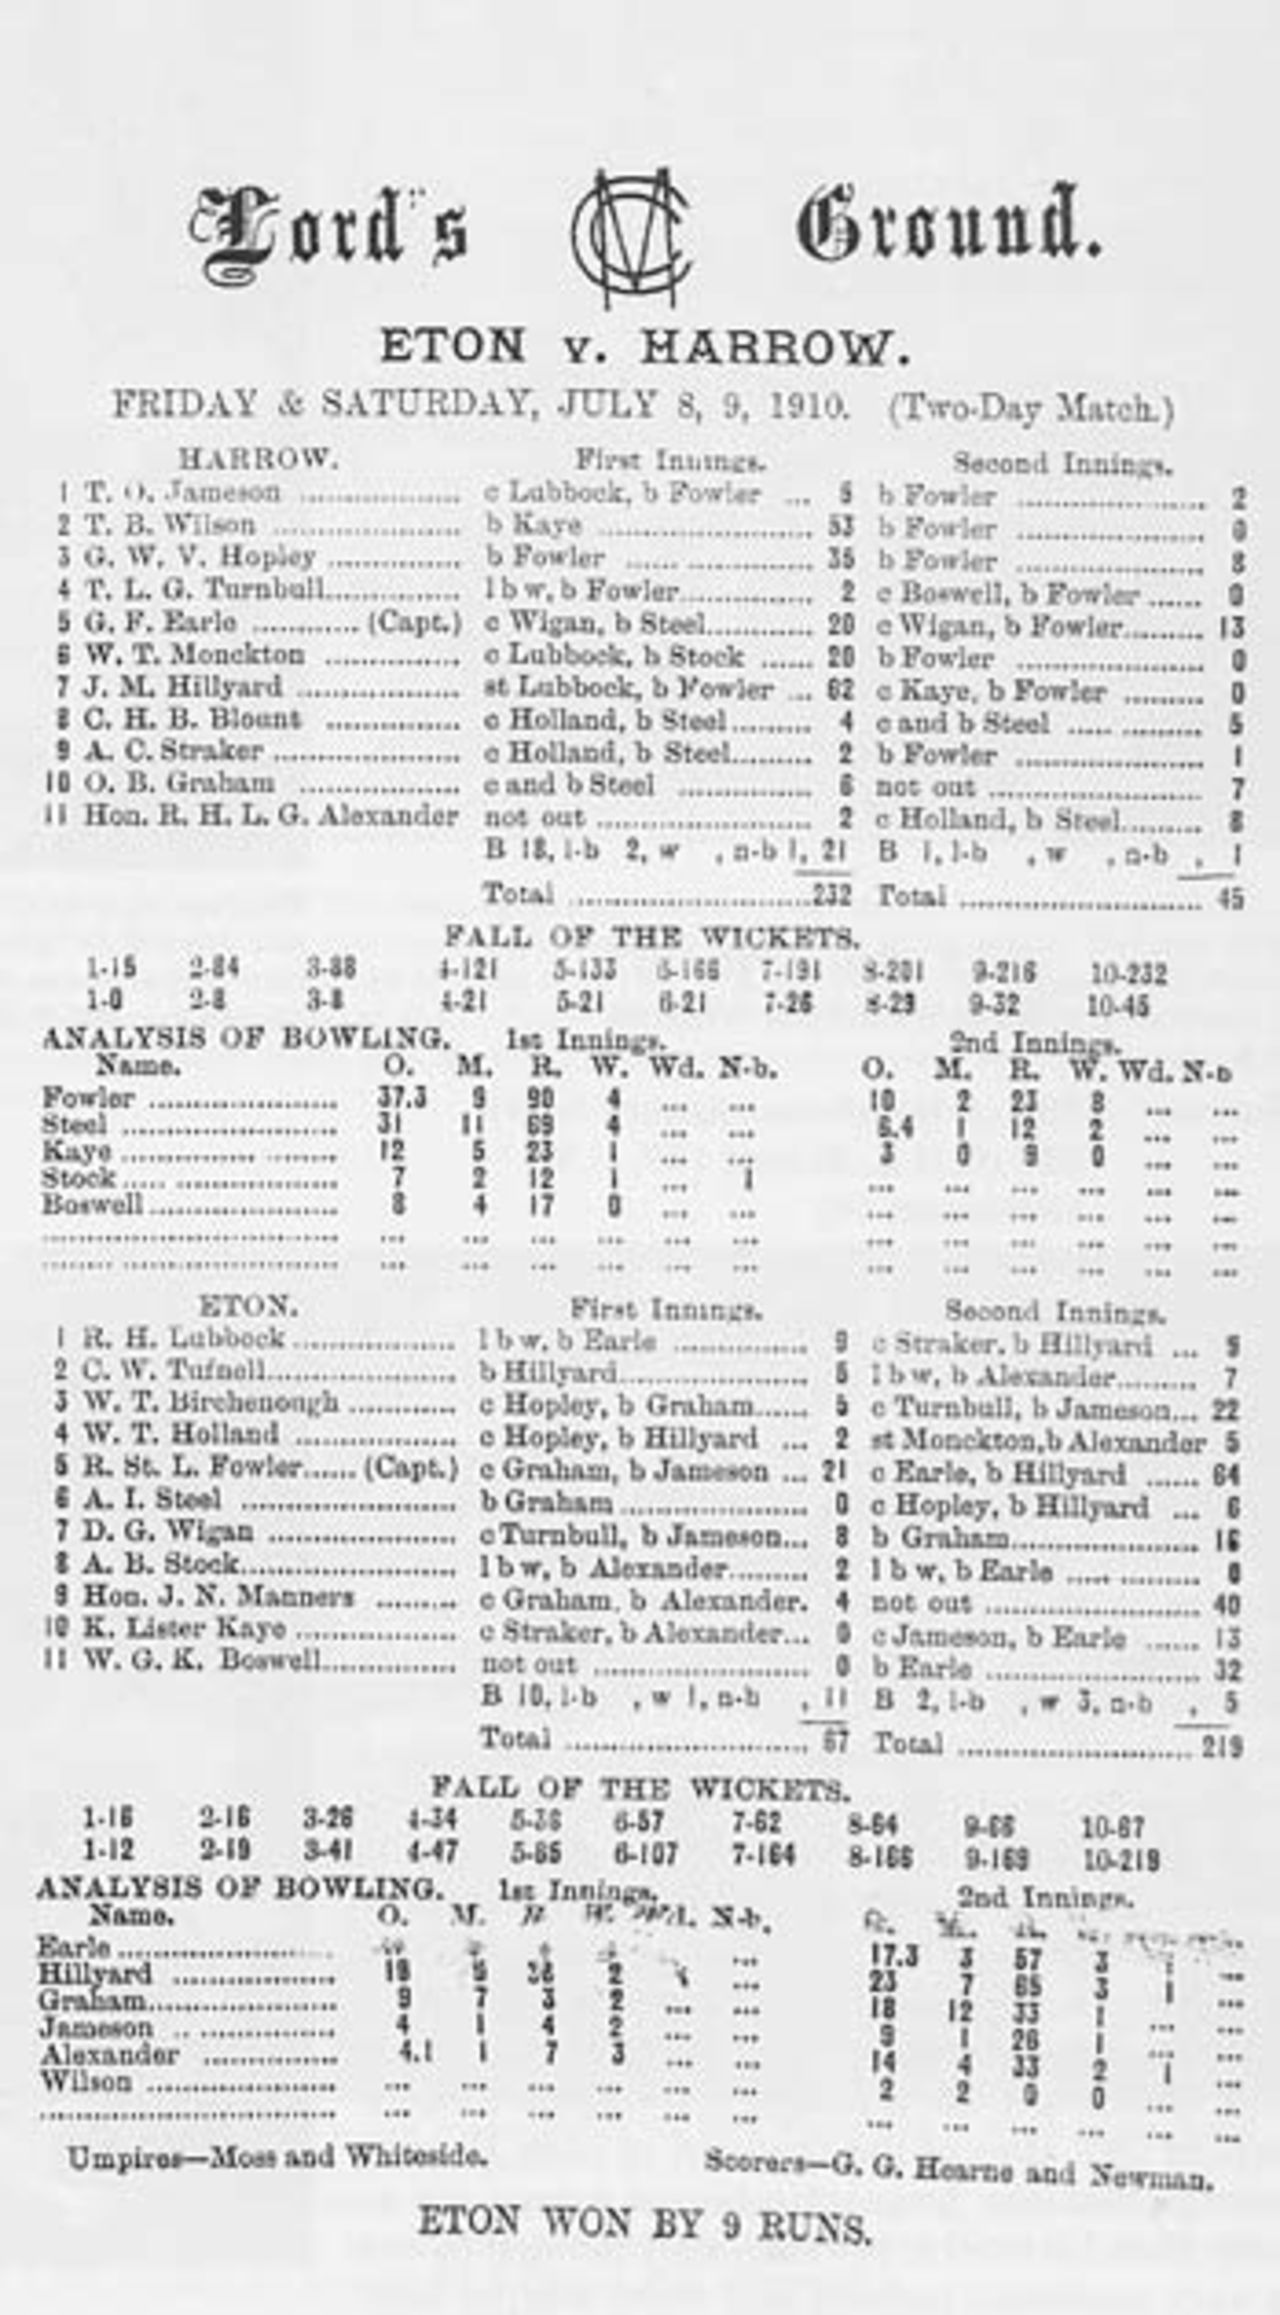 Scorecard from the 1910 Eton-Harrow match at Lord's